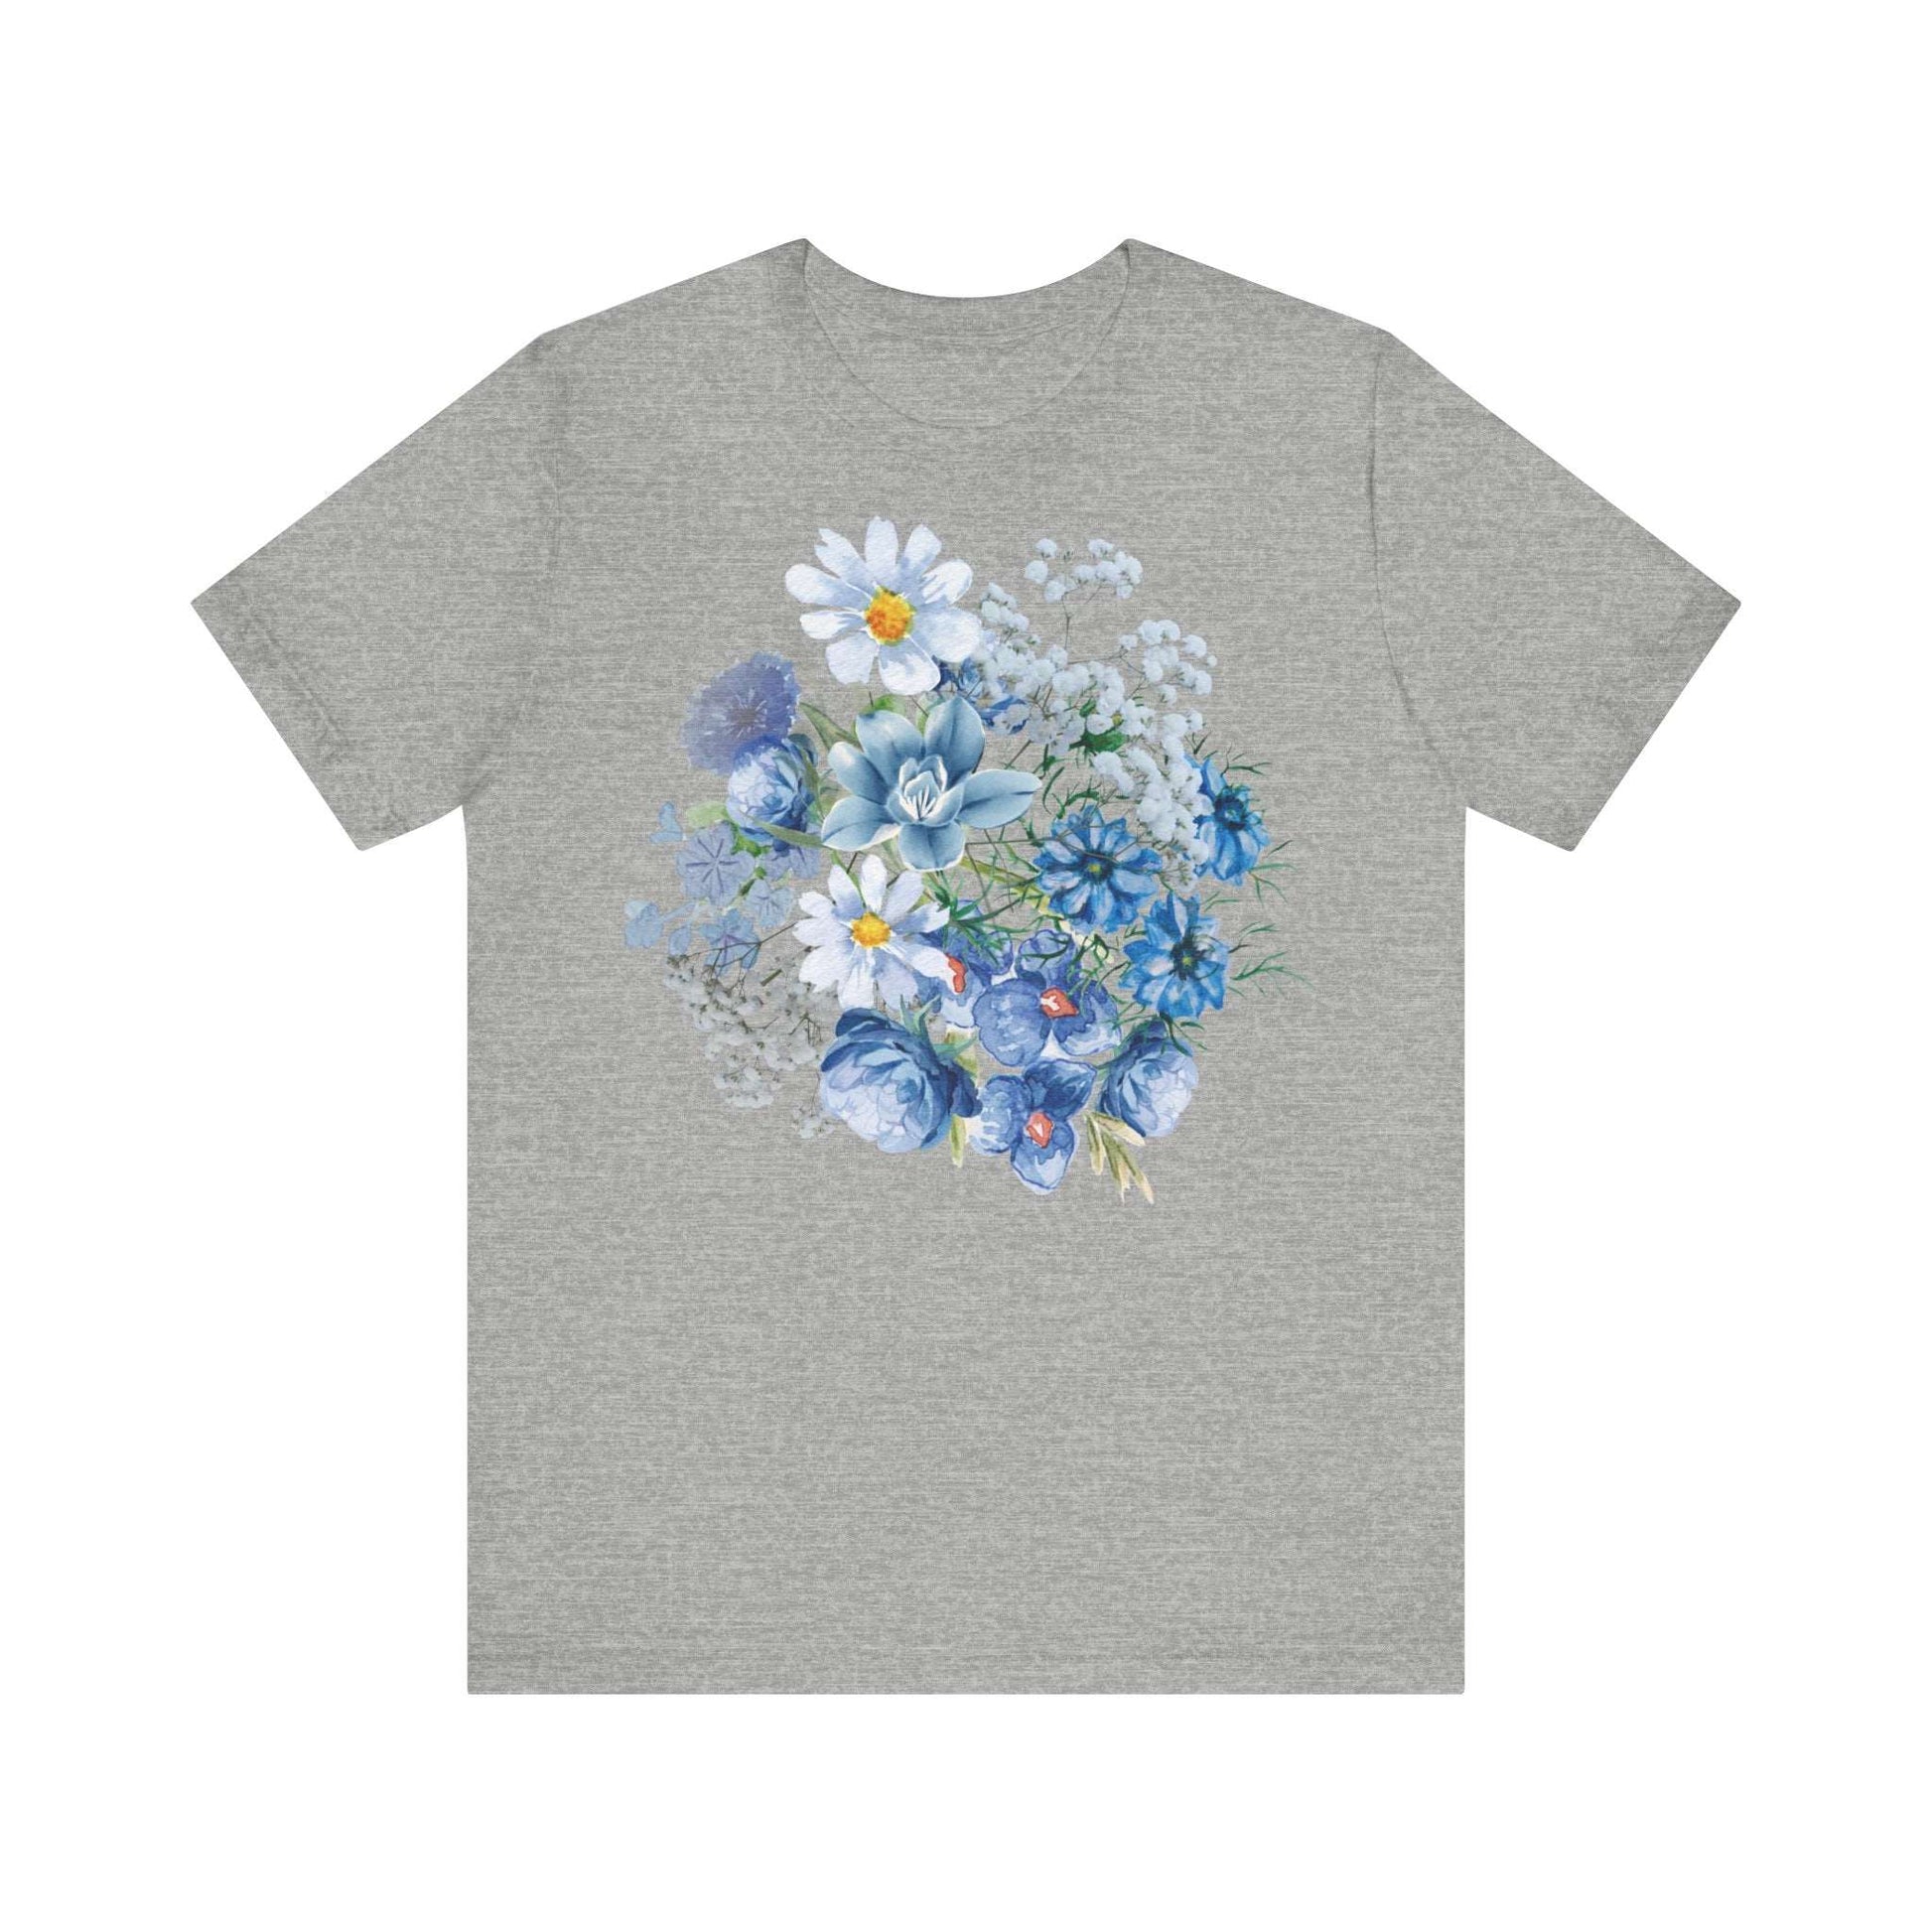 Unisex Vintage Gardening Style Blue Flower Jersey Short Sleeve Tee